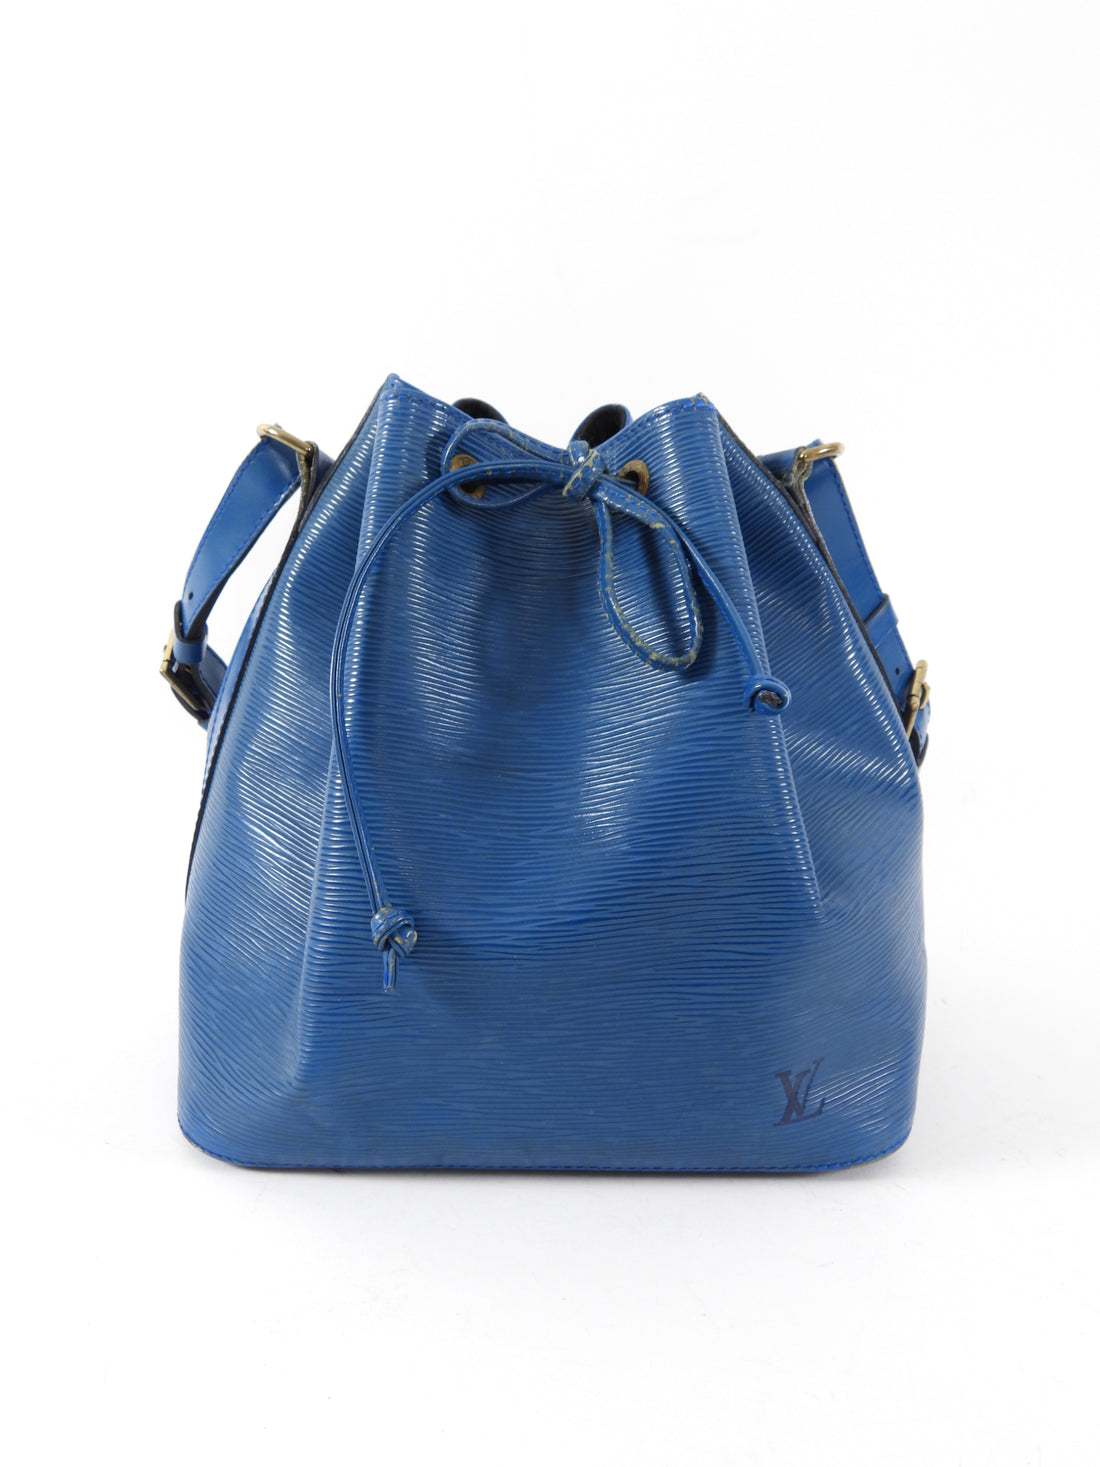 Louis Vuitton Epi Freerun bag – The Hosta